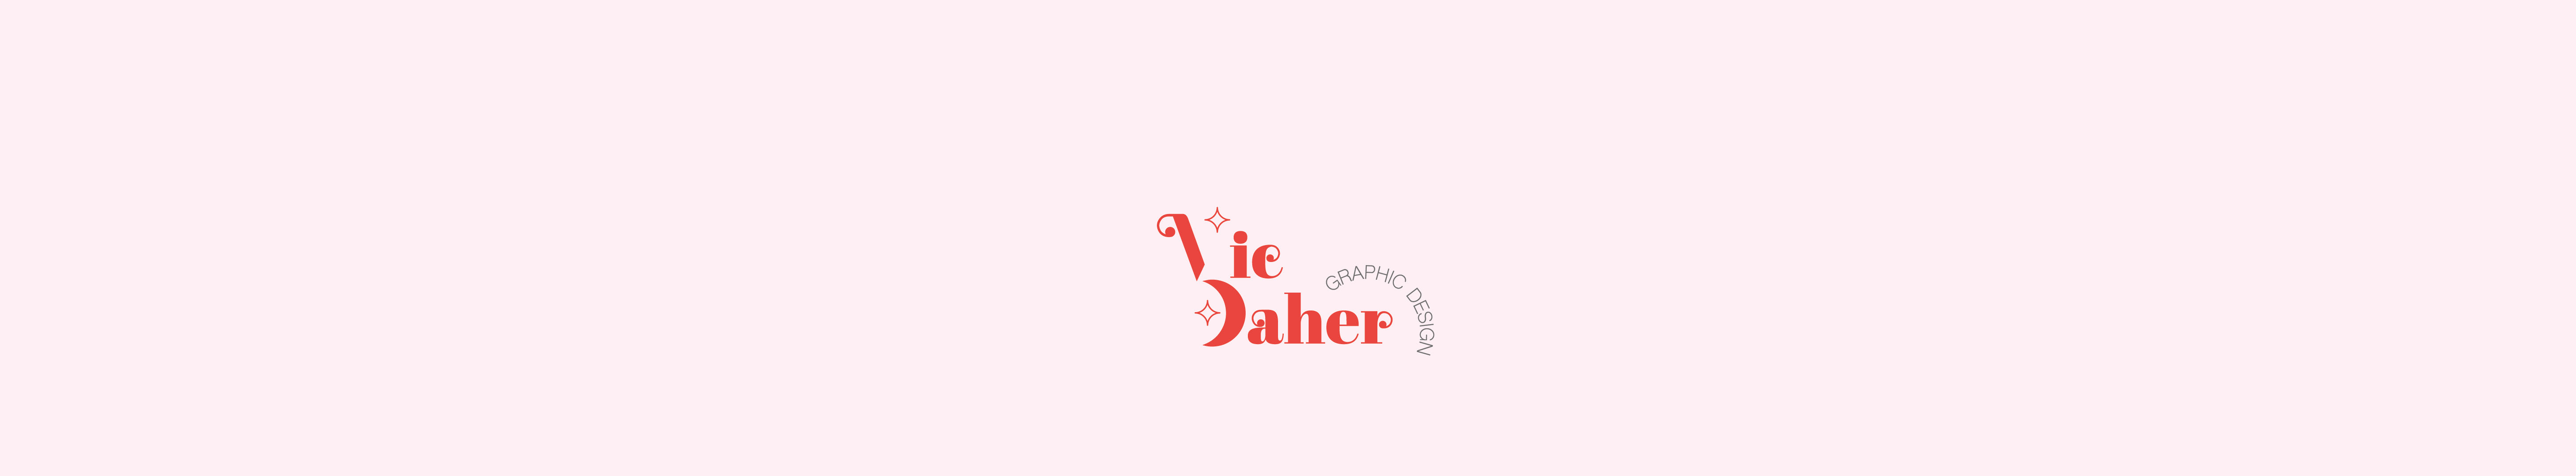 Victoria Daher のプロファイルバナー